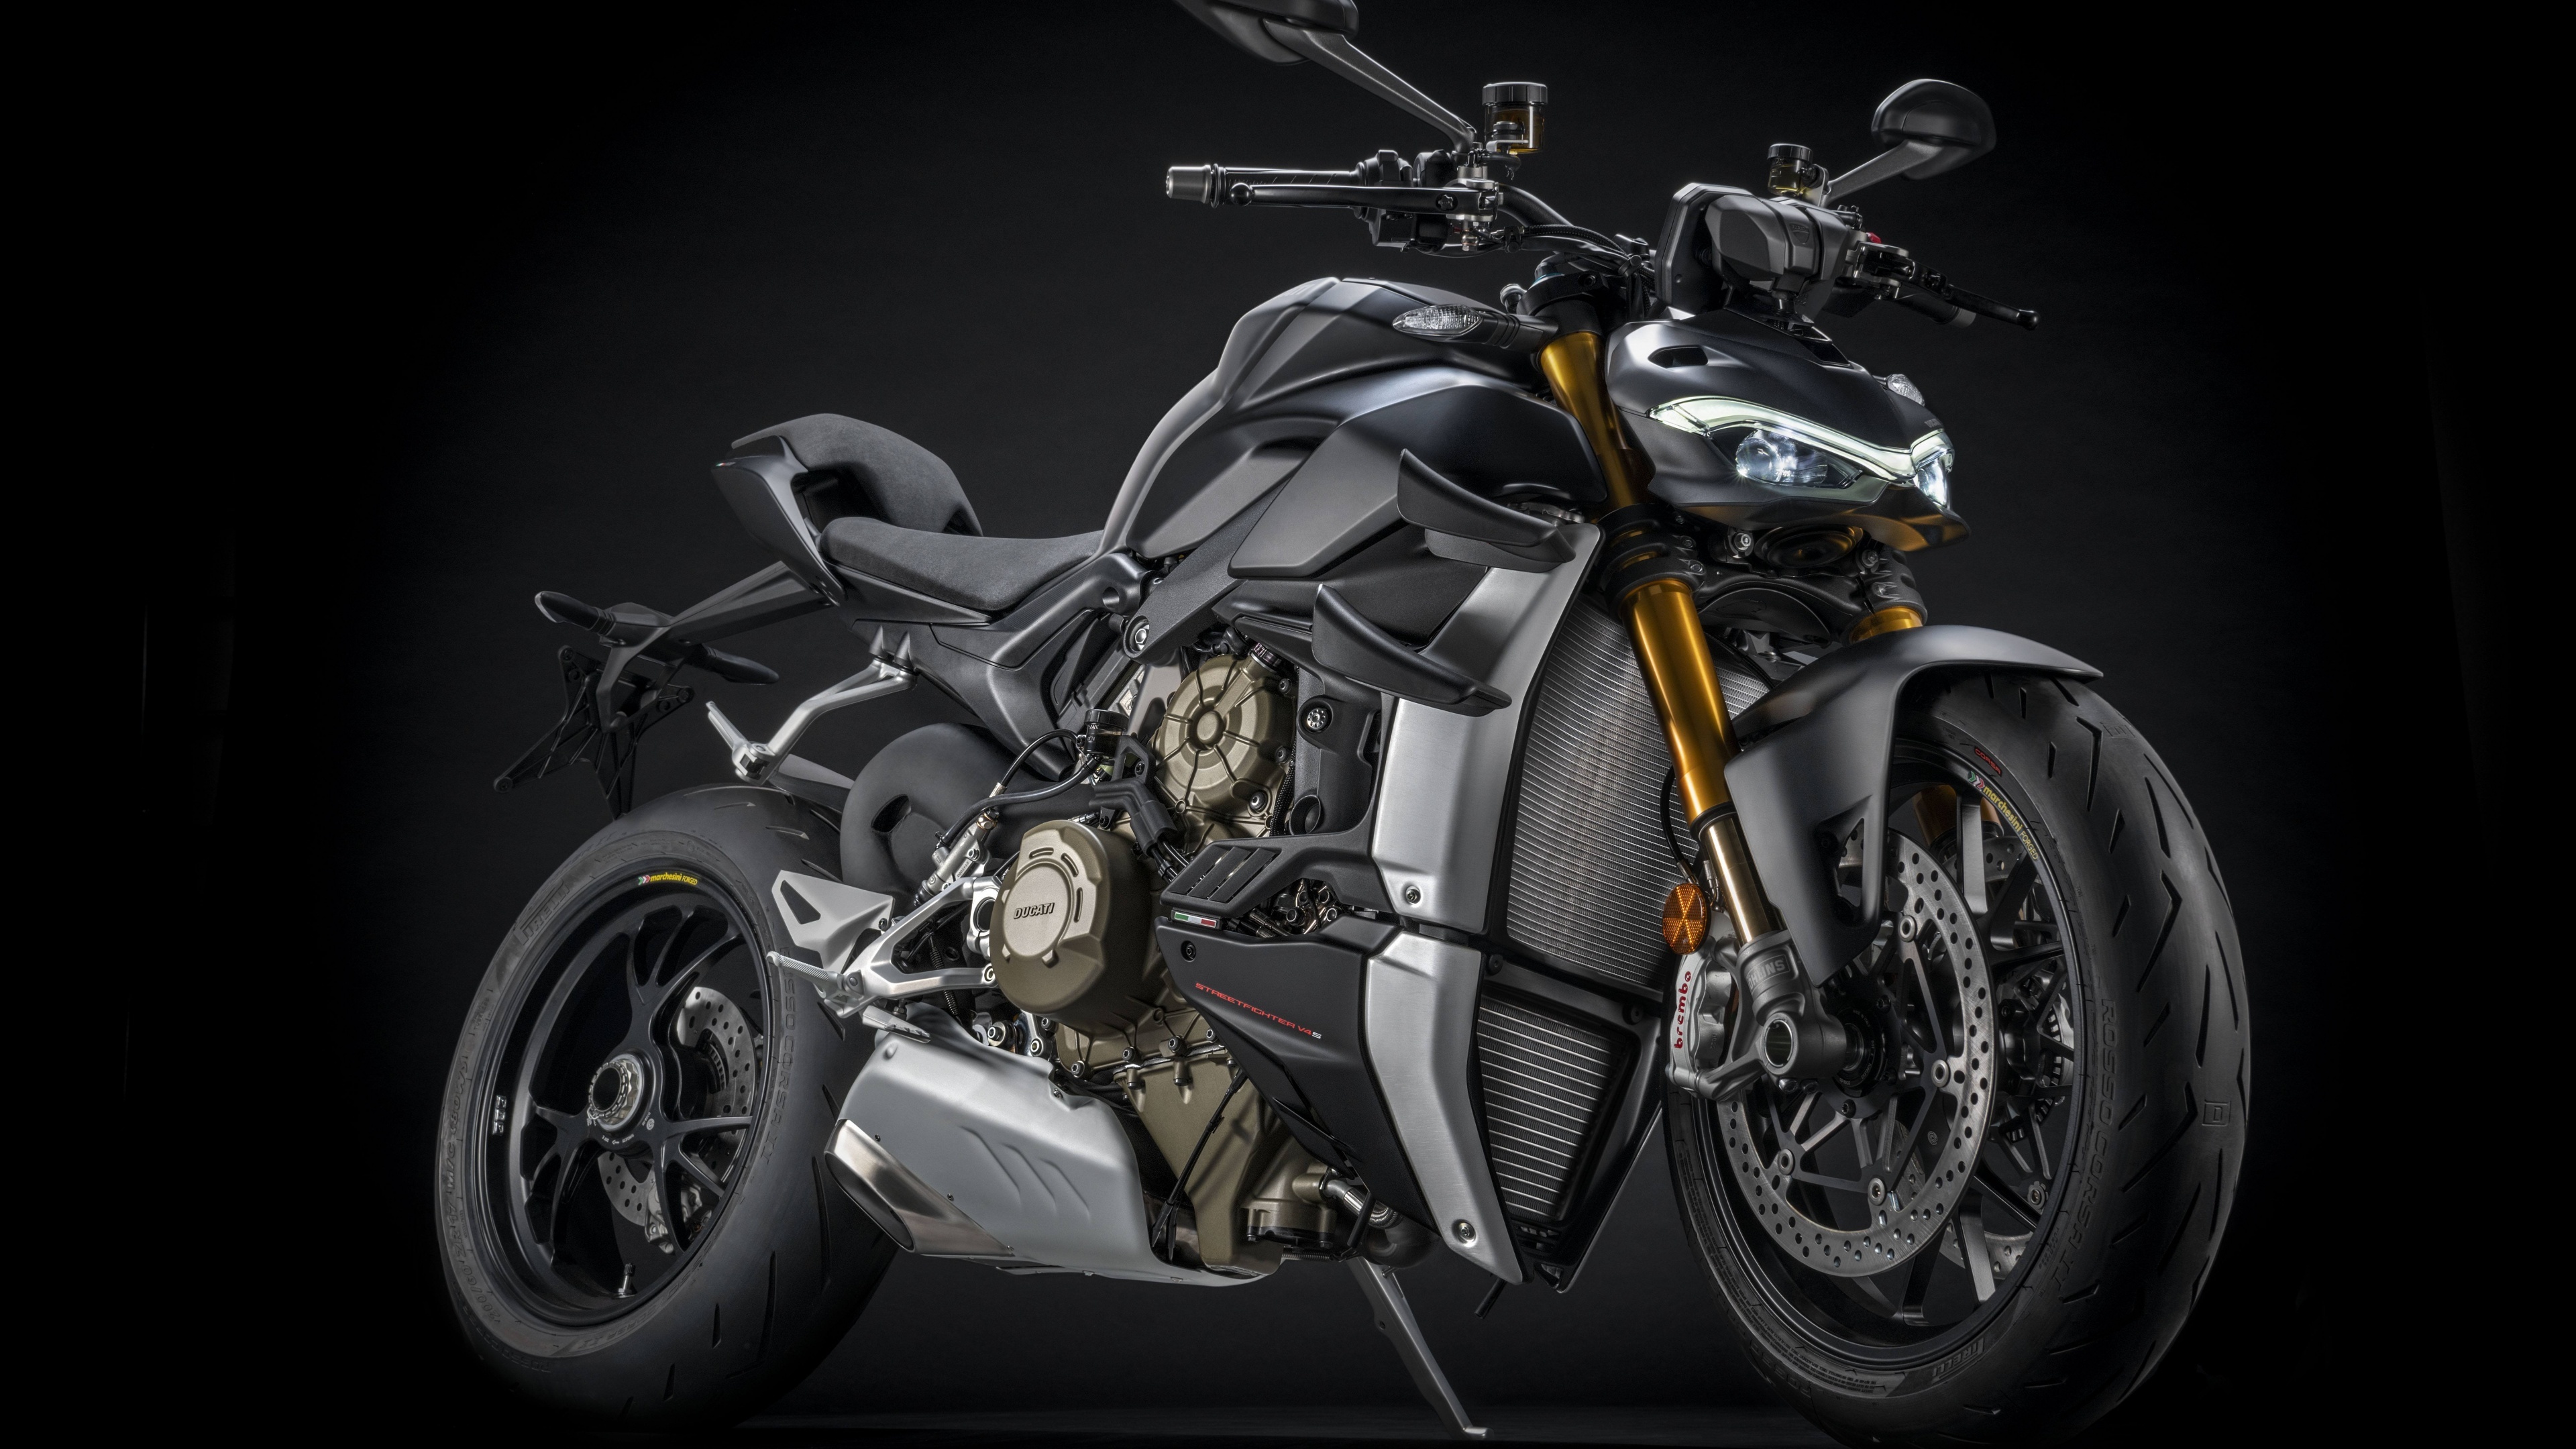 Ducati Streetfighter, Dark stealth wallpaper, 2021 model, Blackdark background, 3840x2160 4K Desktop